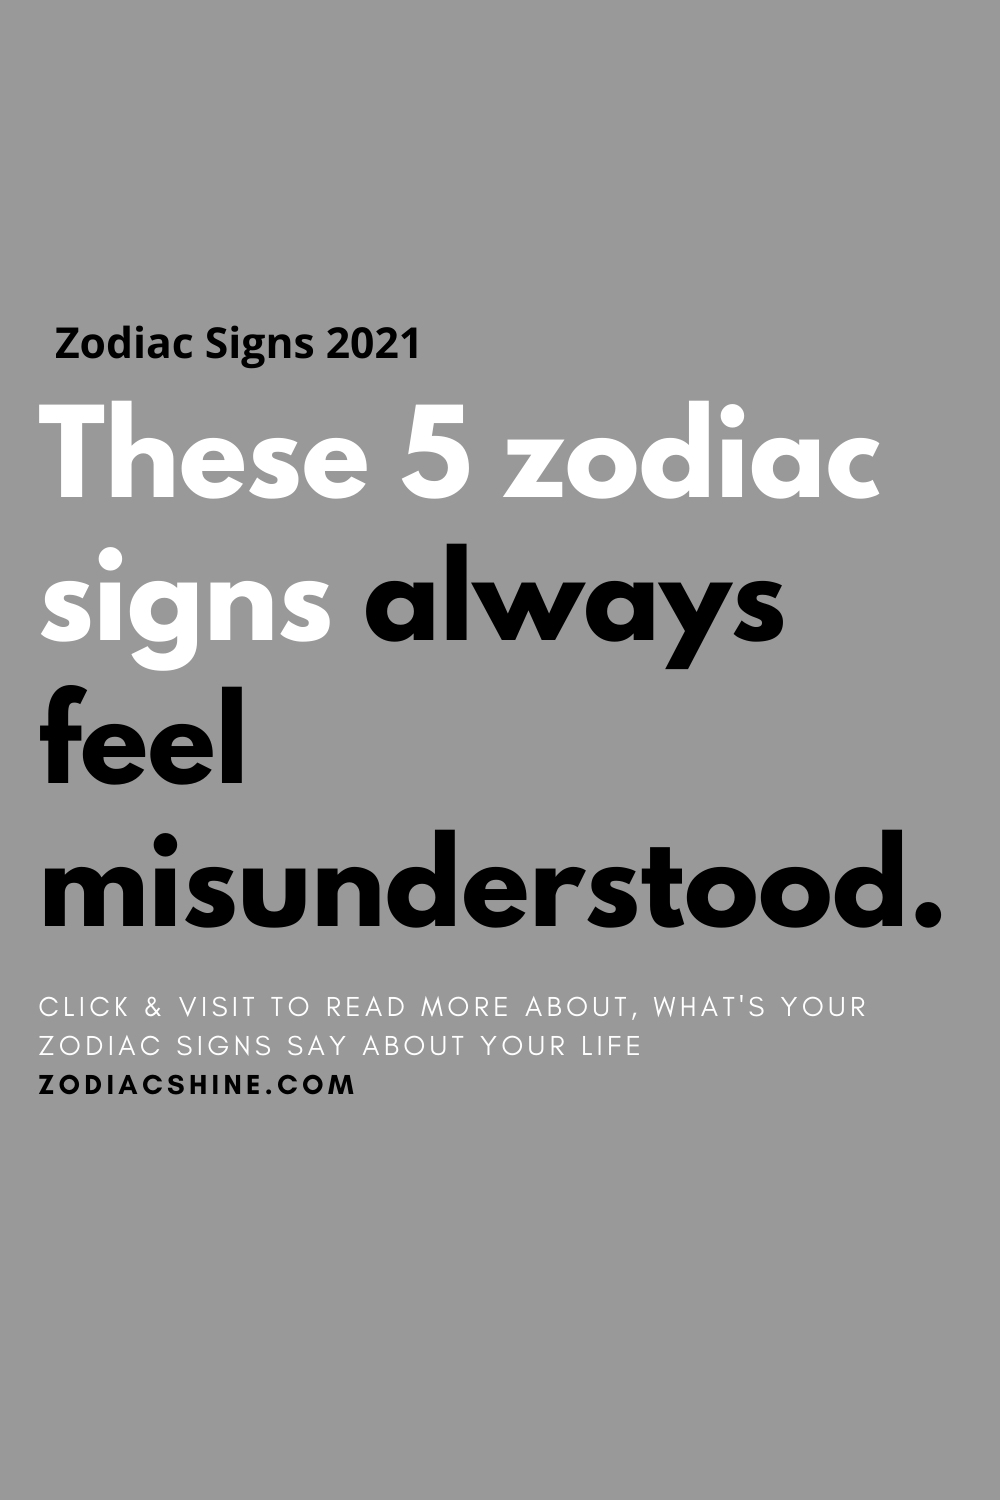 These 5 zodiac signs always feel misunderstood.